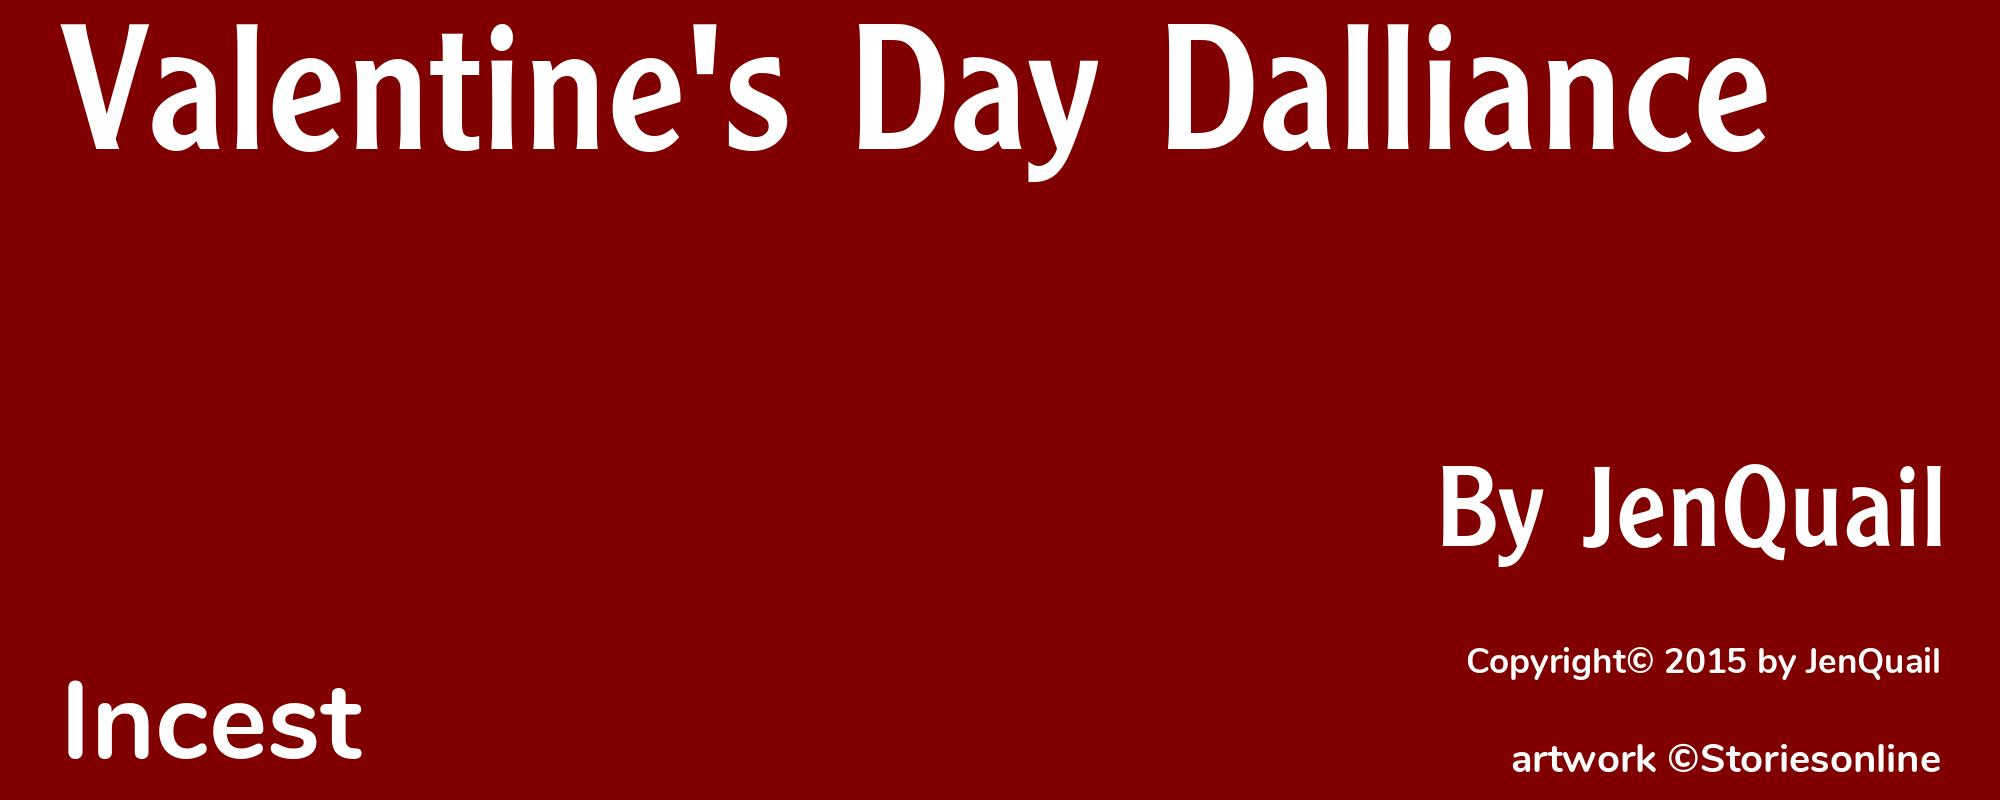 Valentine's Day Dalliance - Cover